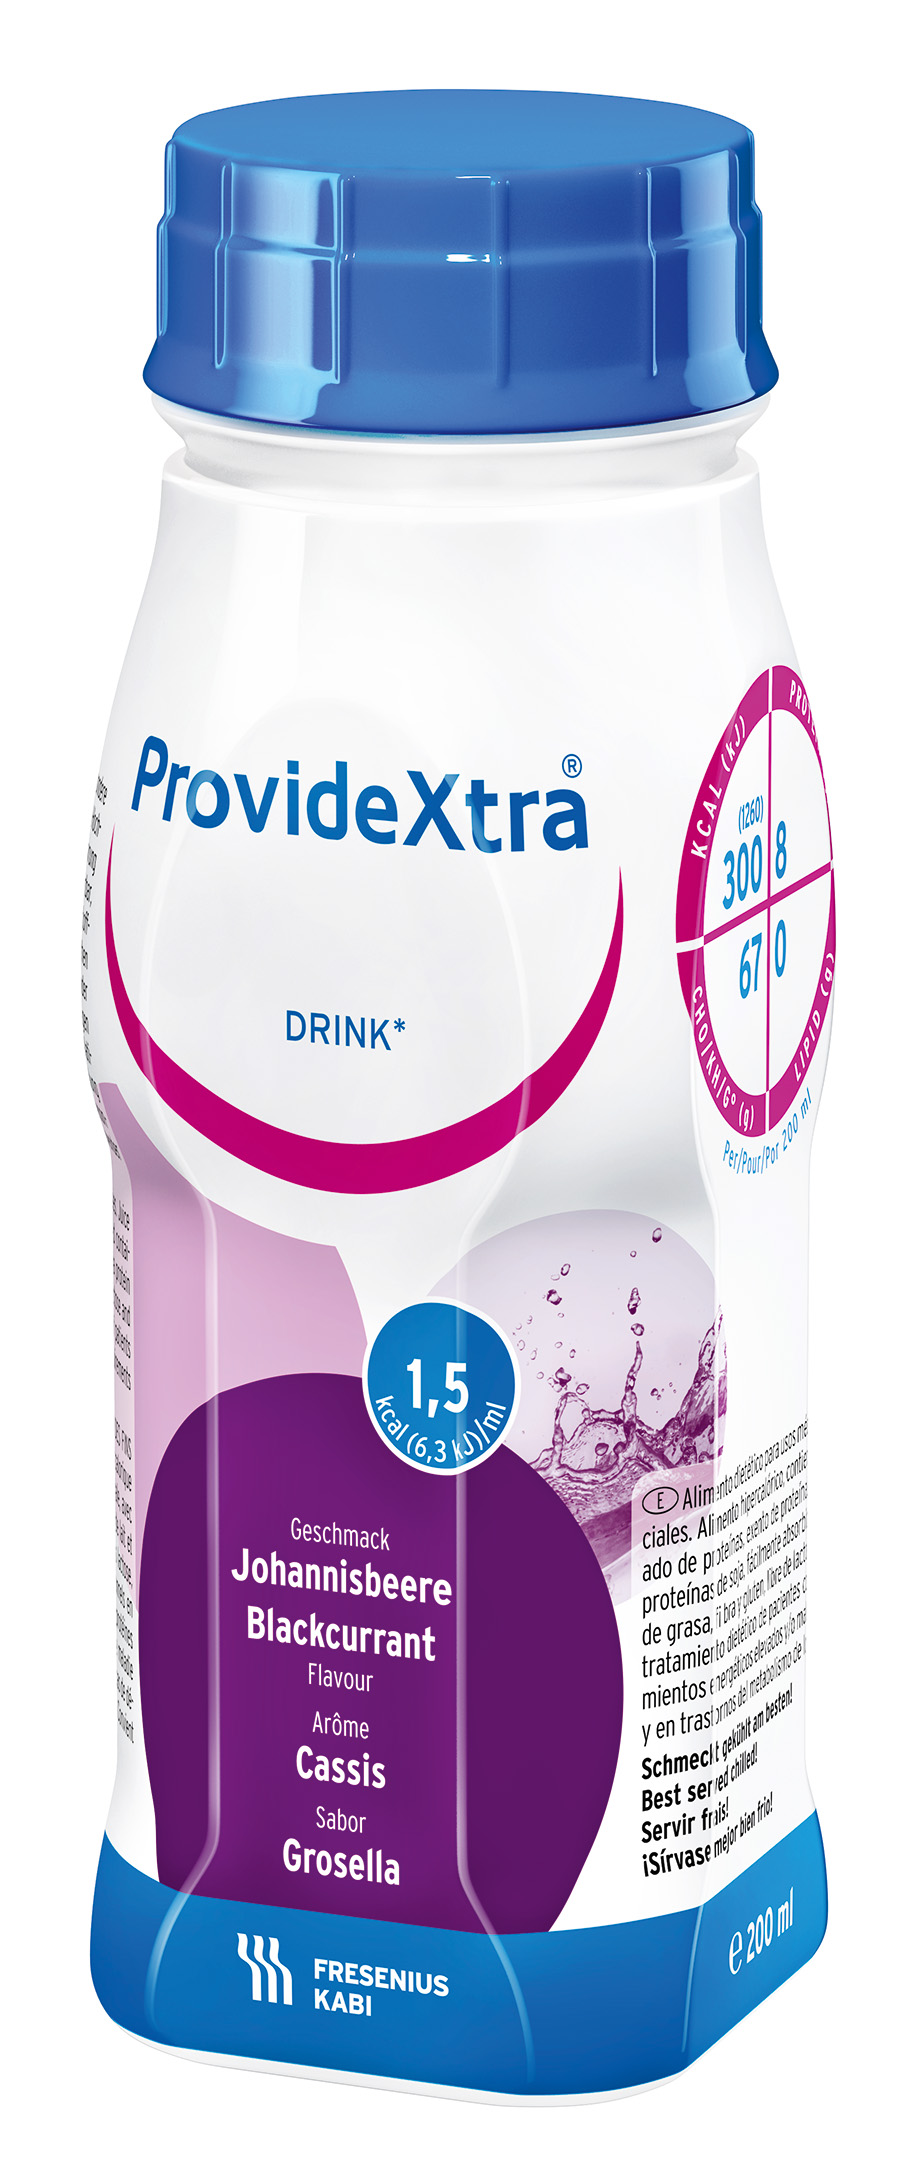 Providextra Drink solbær, 4x200